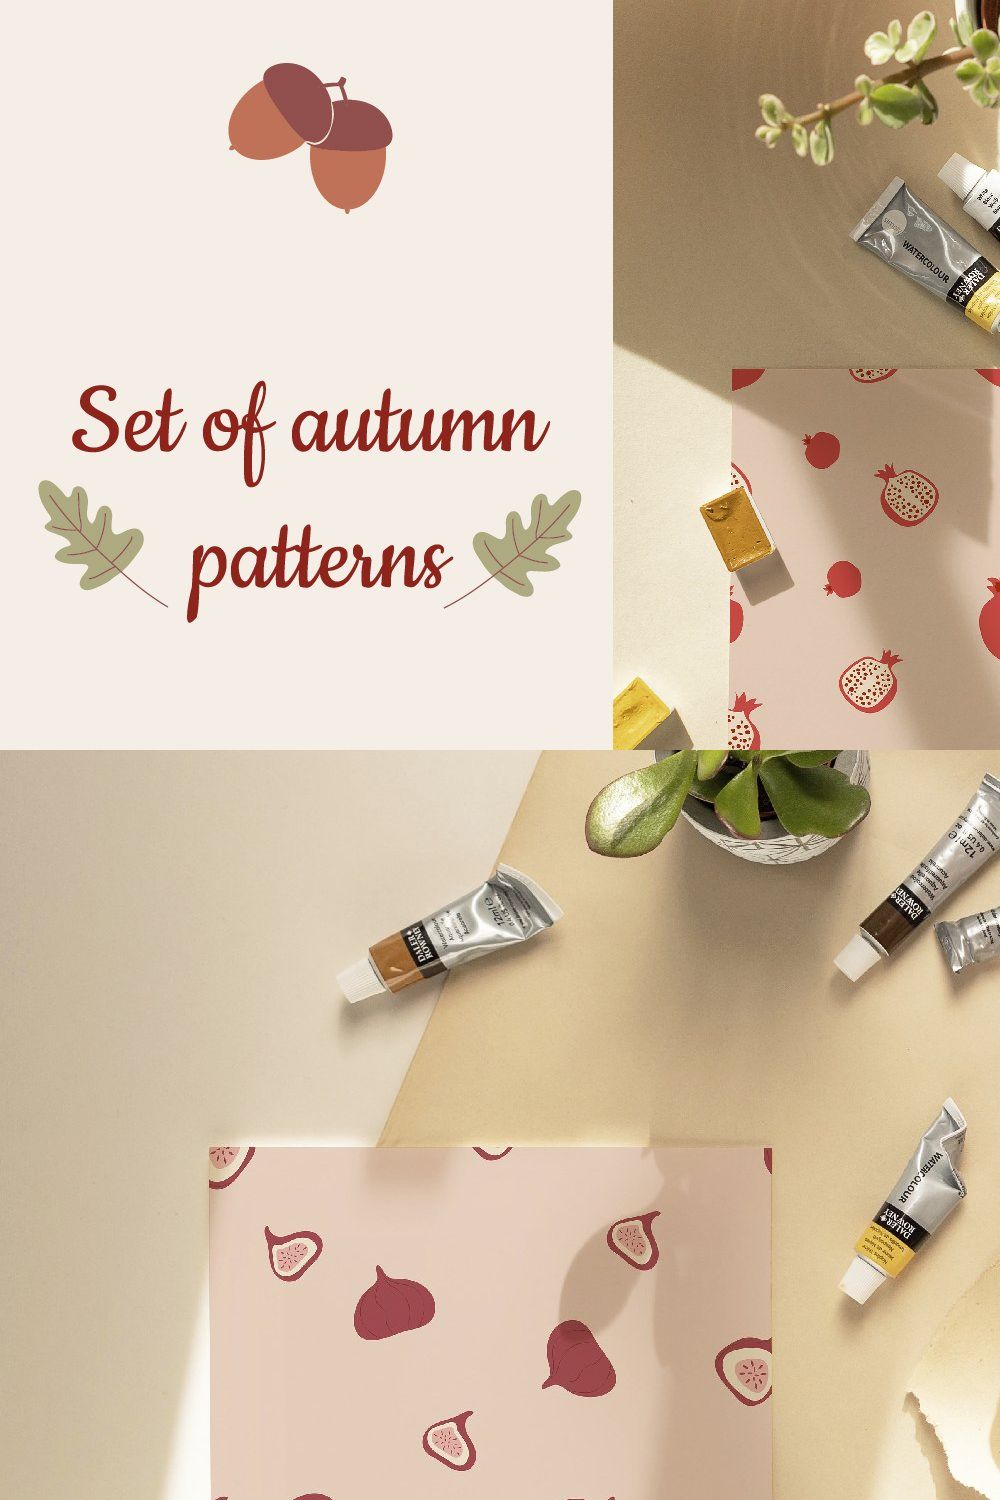 Set of autumn patterns pinterest preview image.